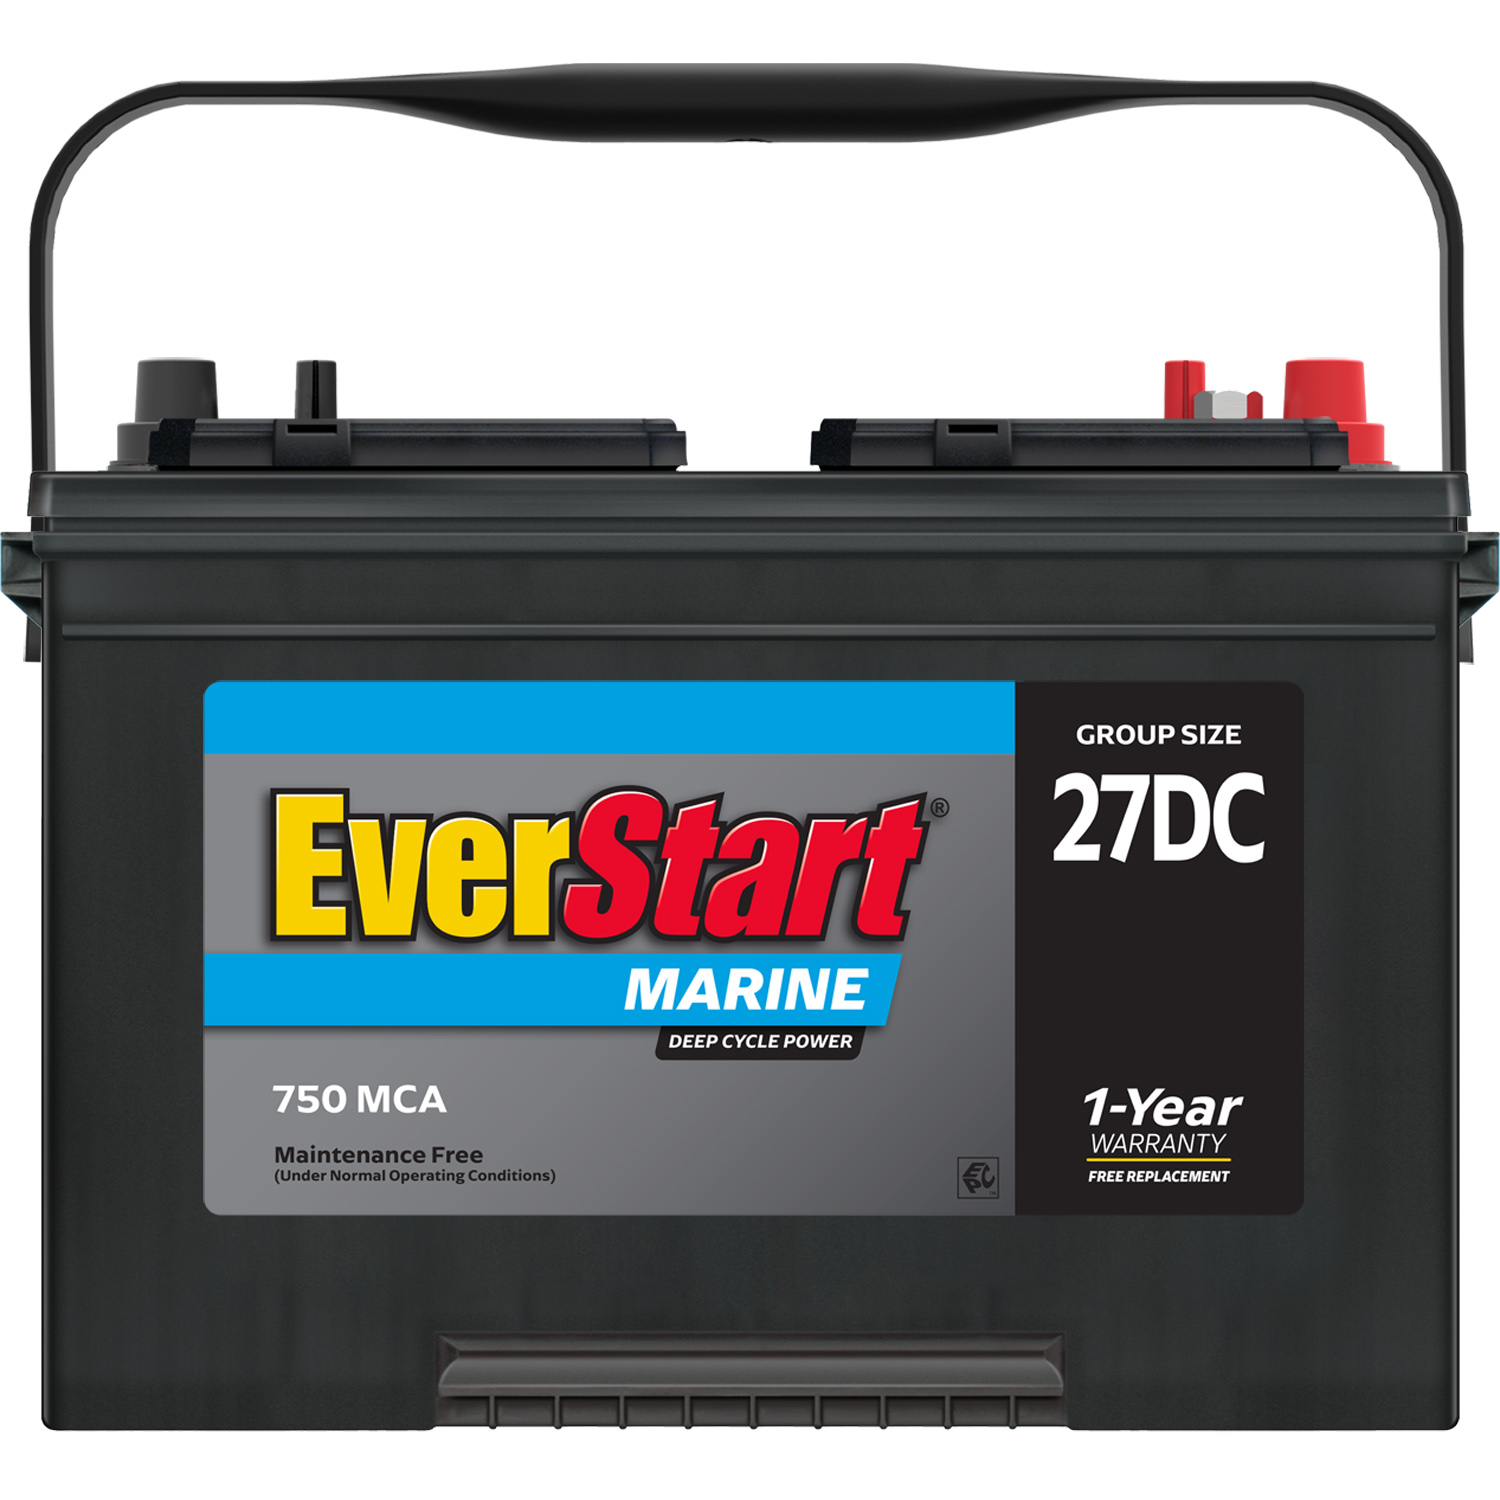 EverStart Lead Acid Marine & RV Deep Cycle Battery, Group Size 27DC 12 Volt, 750 MCA - image 3 of 7